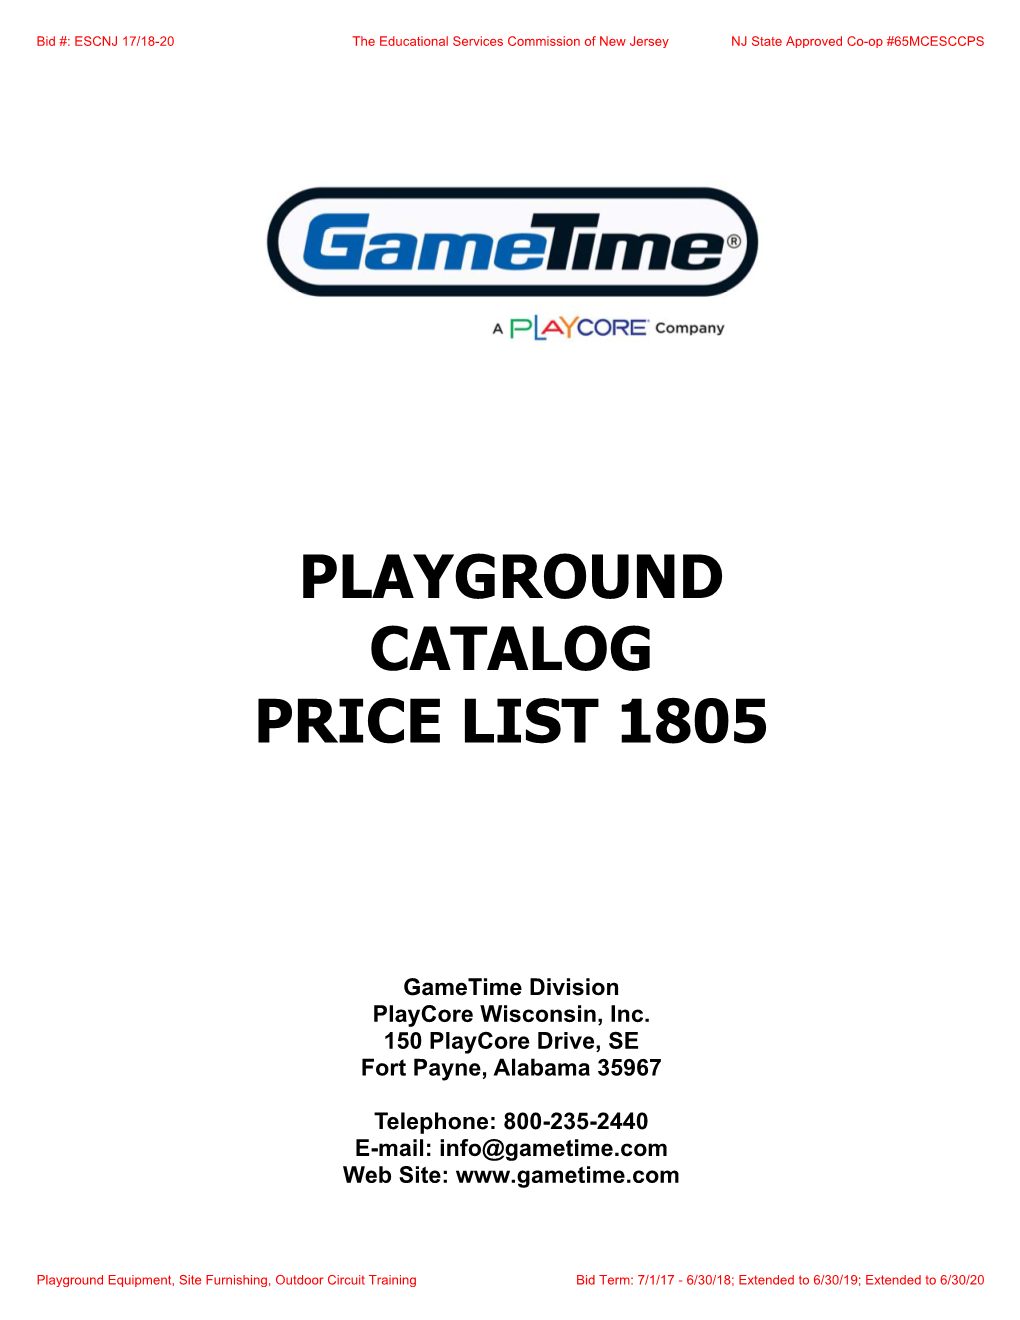 Playground Catalog Price List 1805